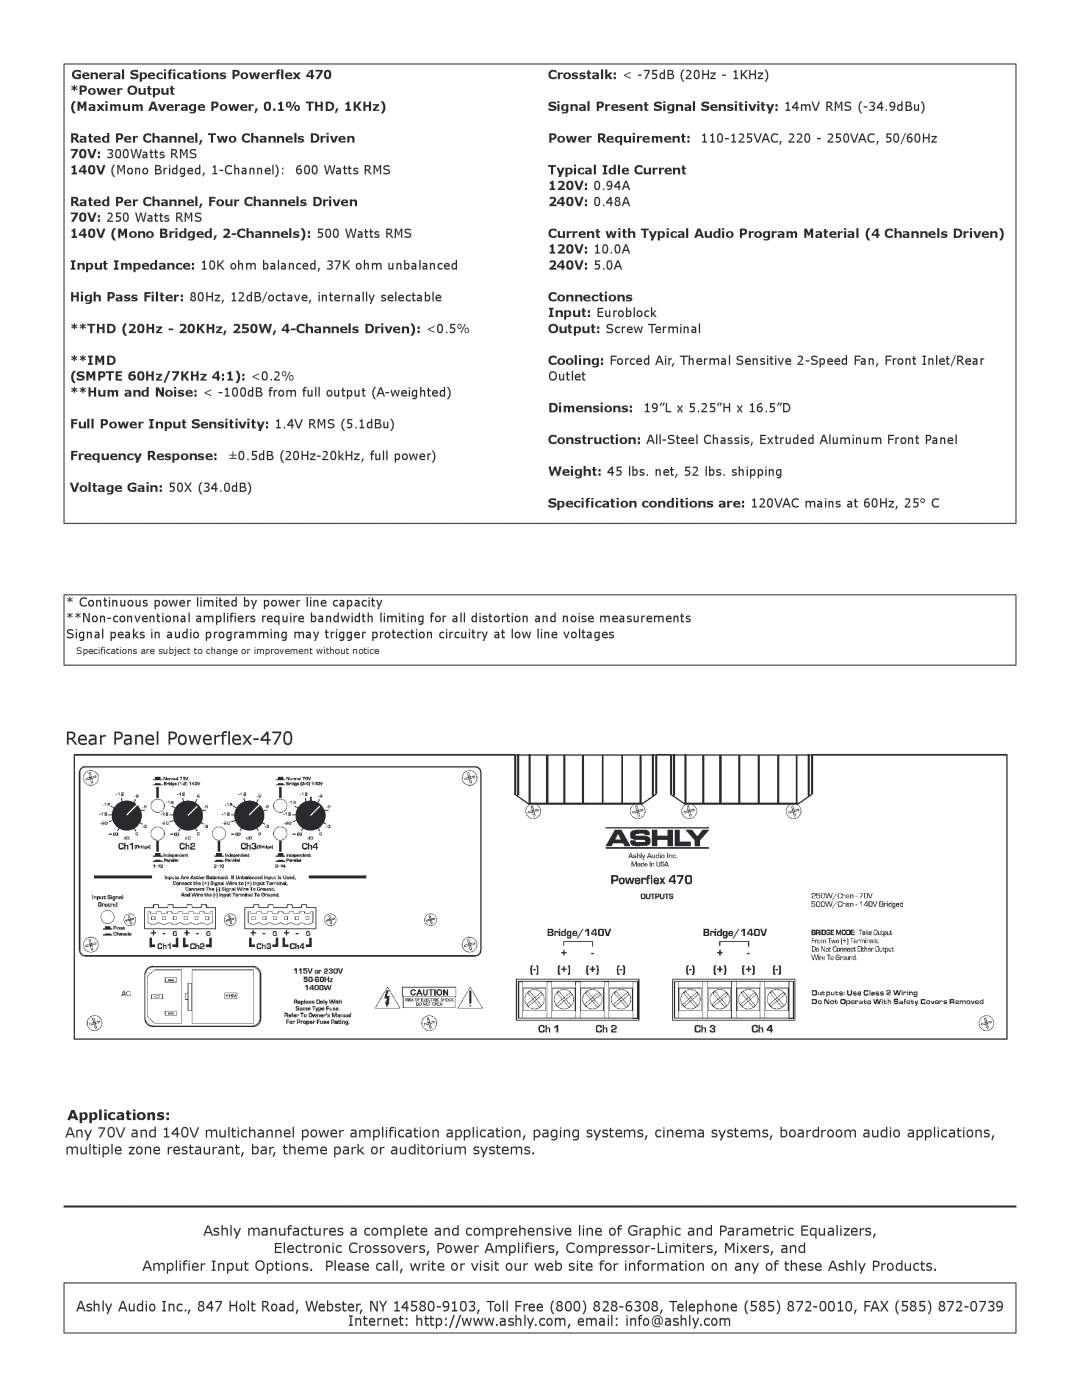 Ashly specifications Applications, Rear Panel Powerflex-470 